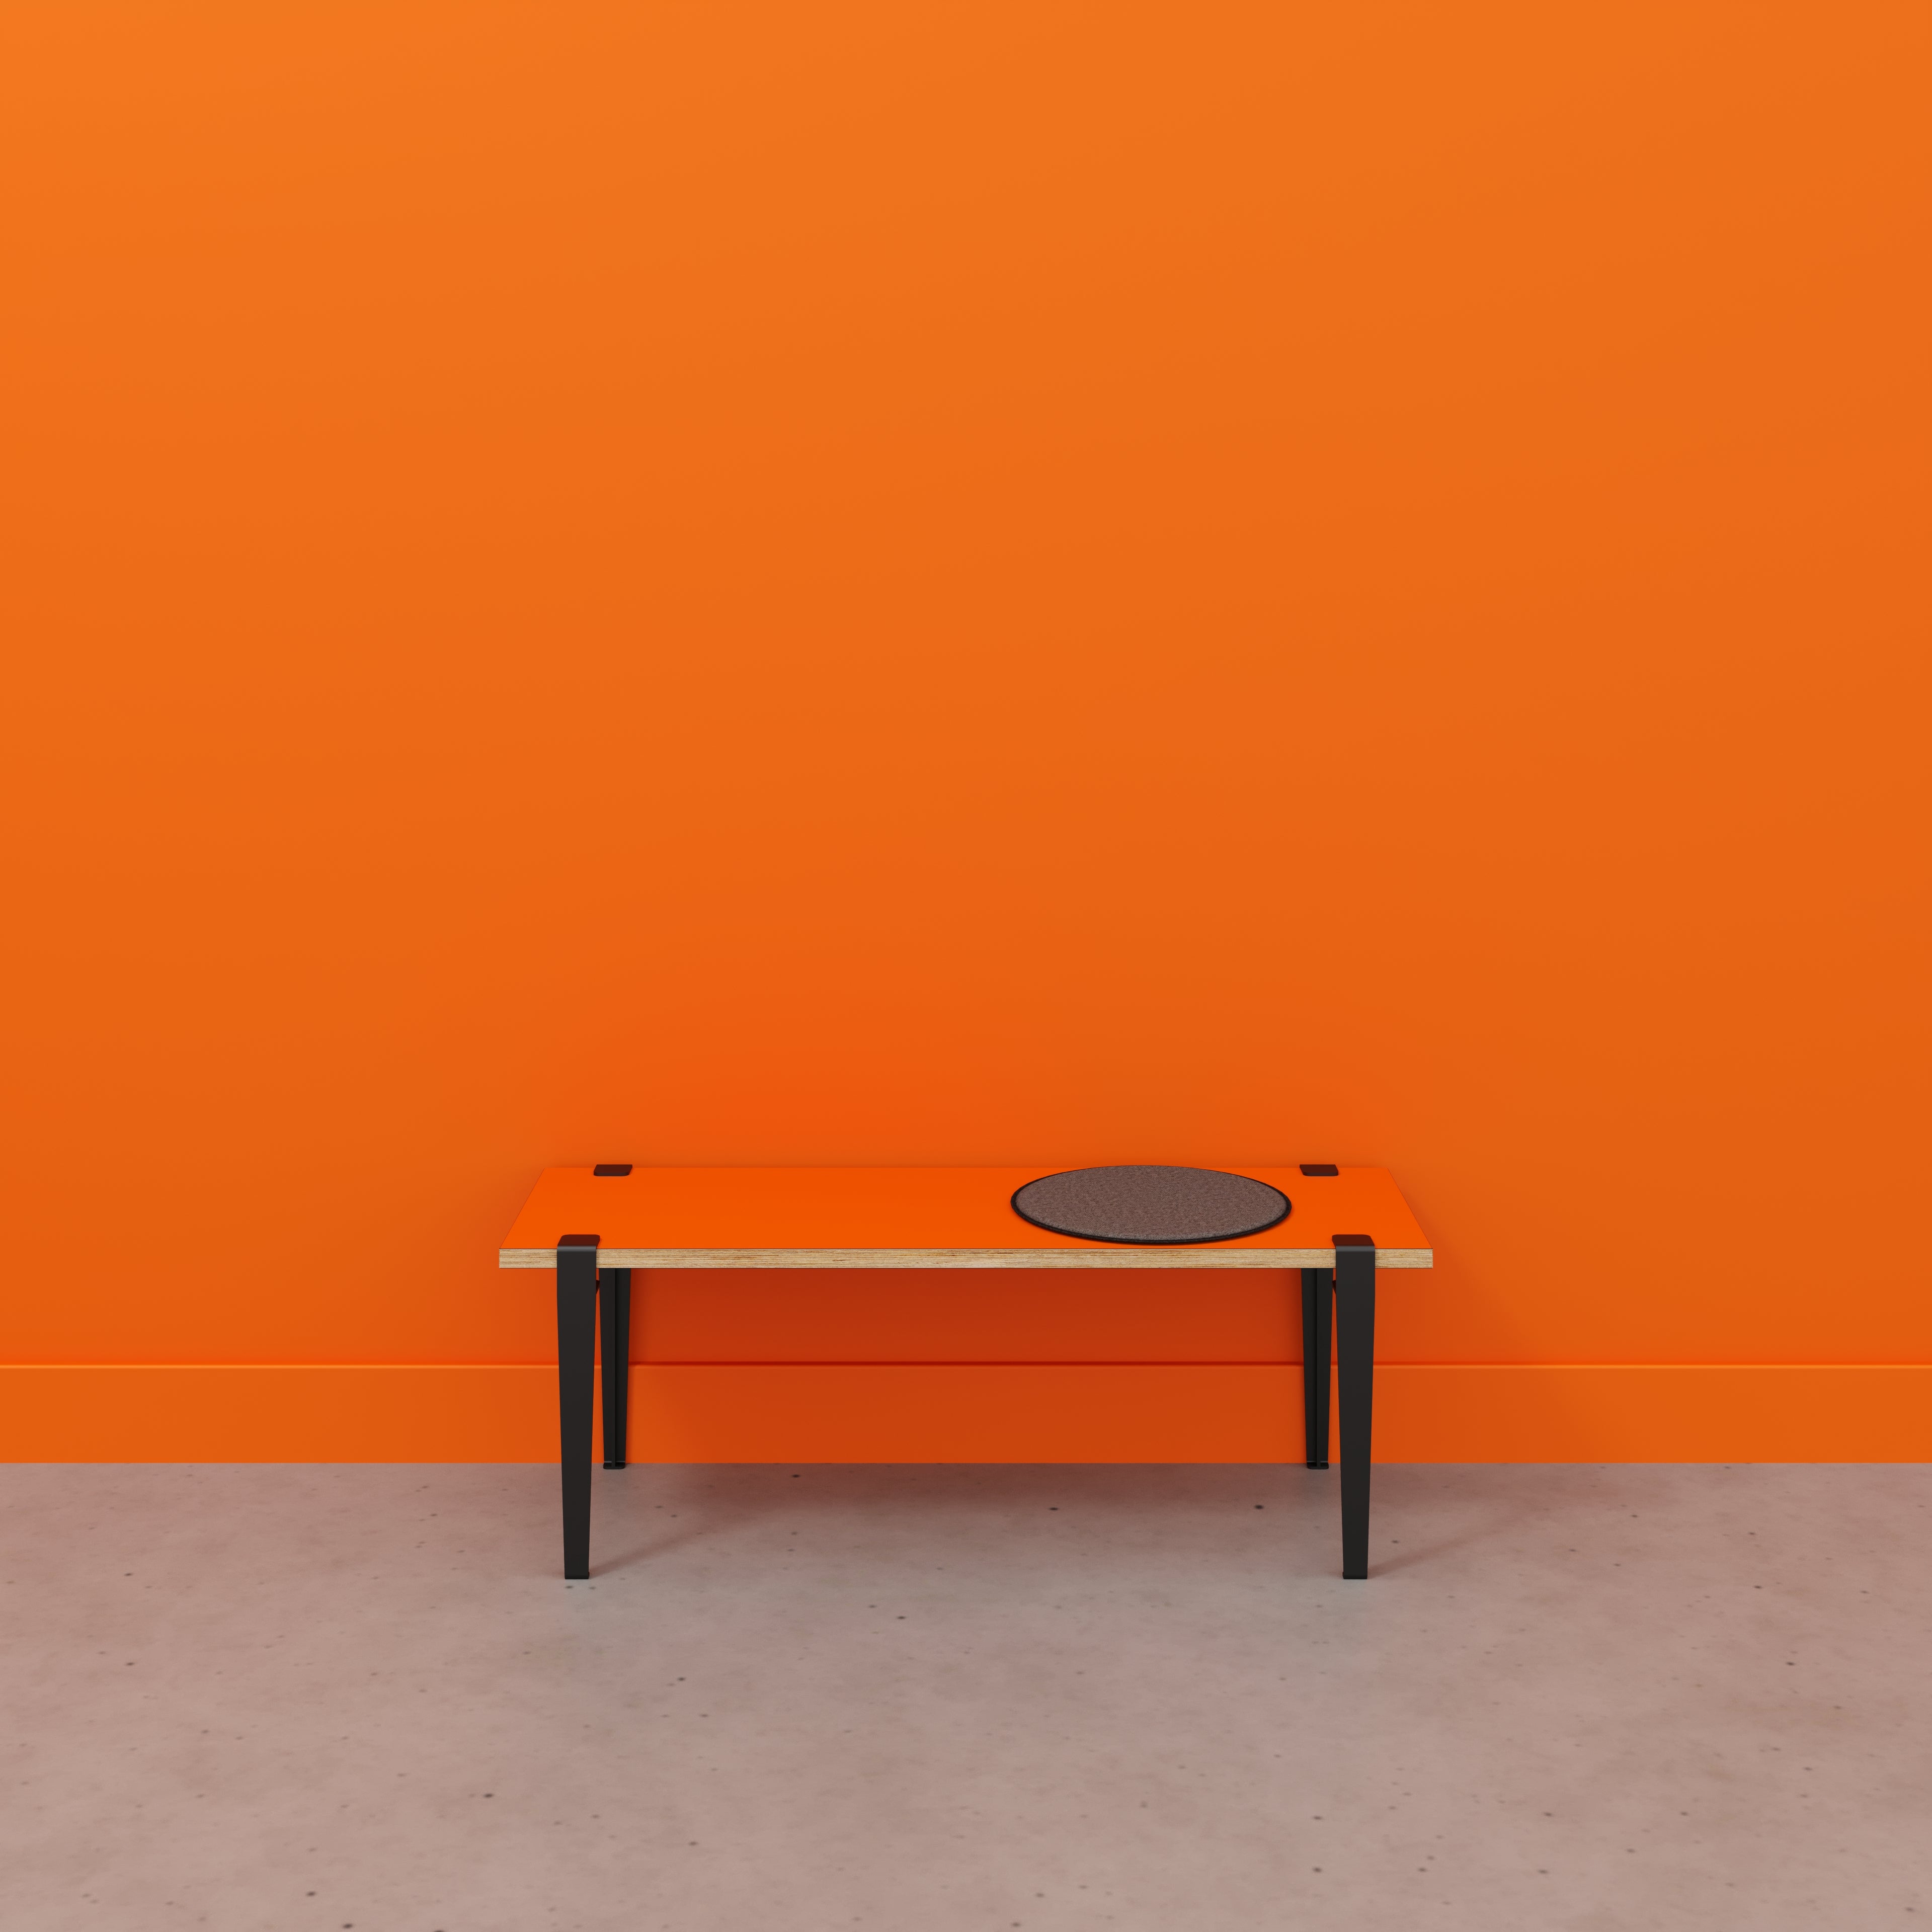 Bench Seat with Black Tiptoe Legs - Formica Levante Orange - 1200(w) x 400(d) x 450(h)